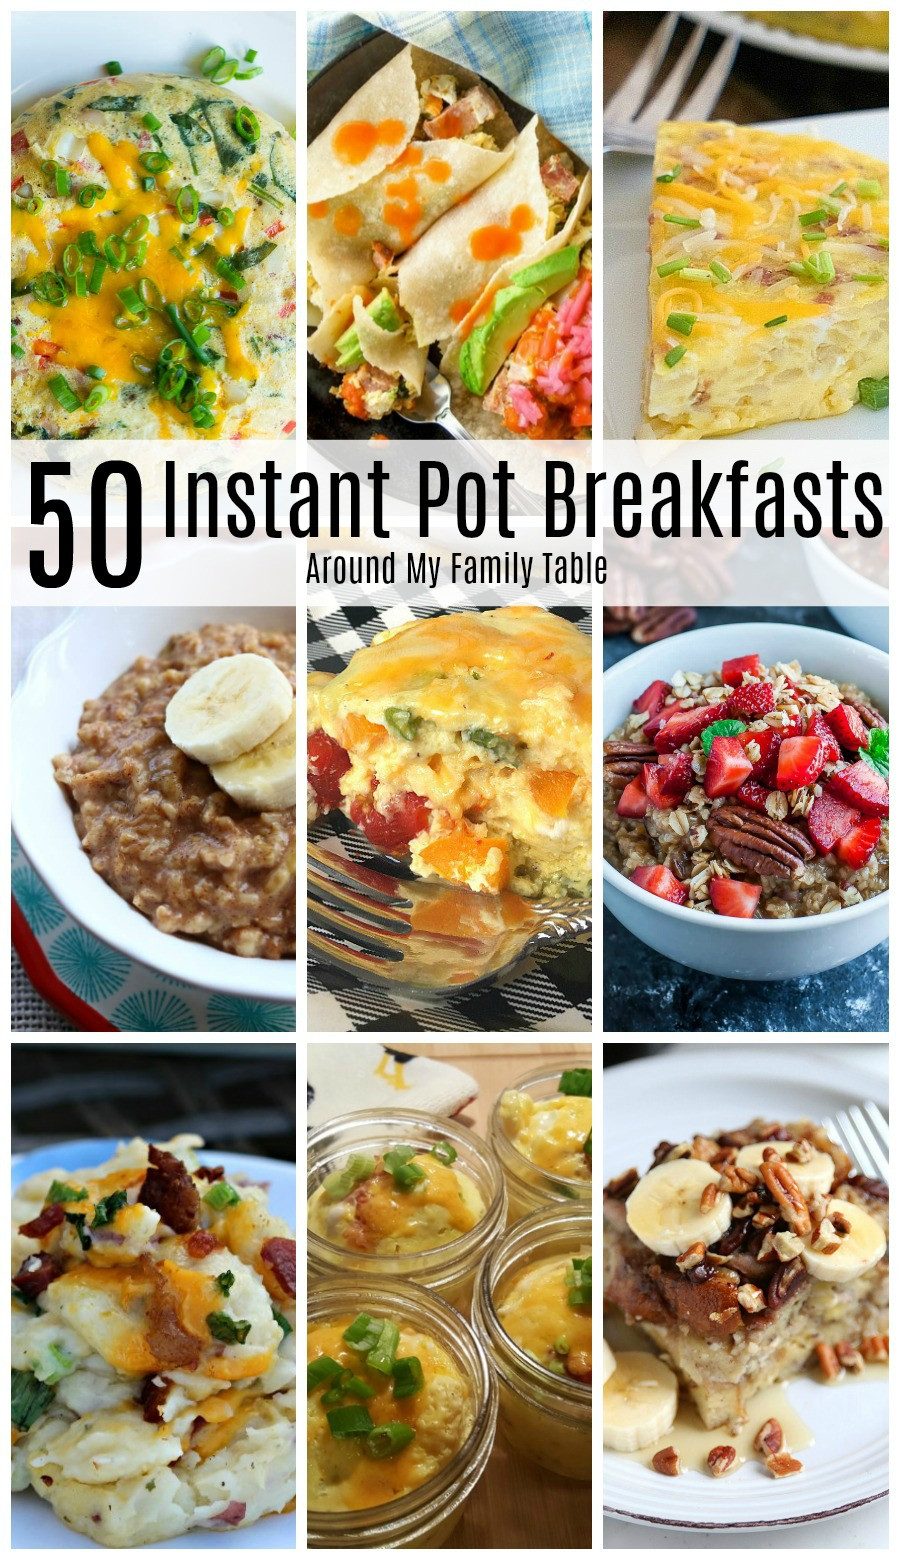 Instant Pot Brunch Recipes
 Instant Pot Breakfast Recipes Around My Family Table